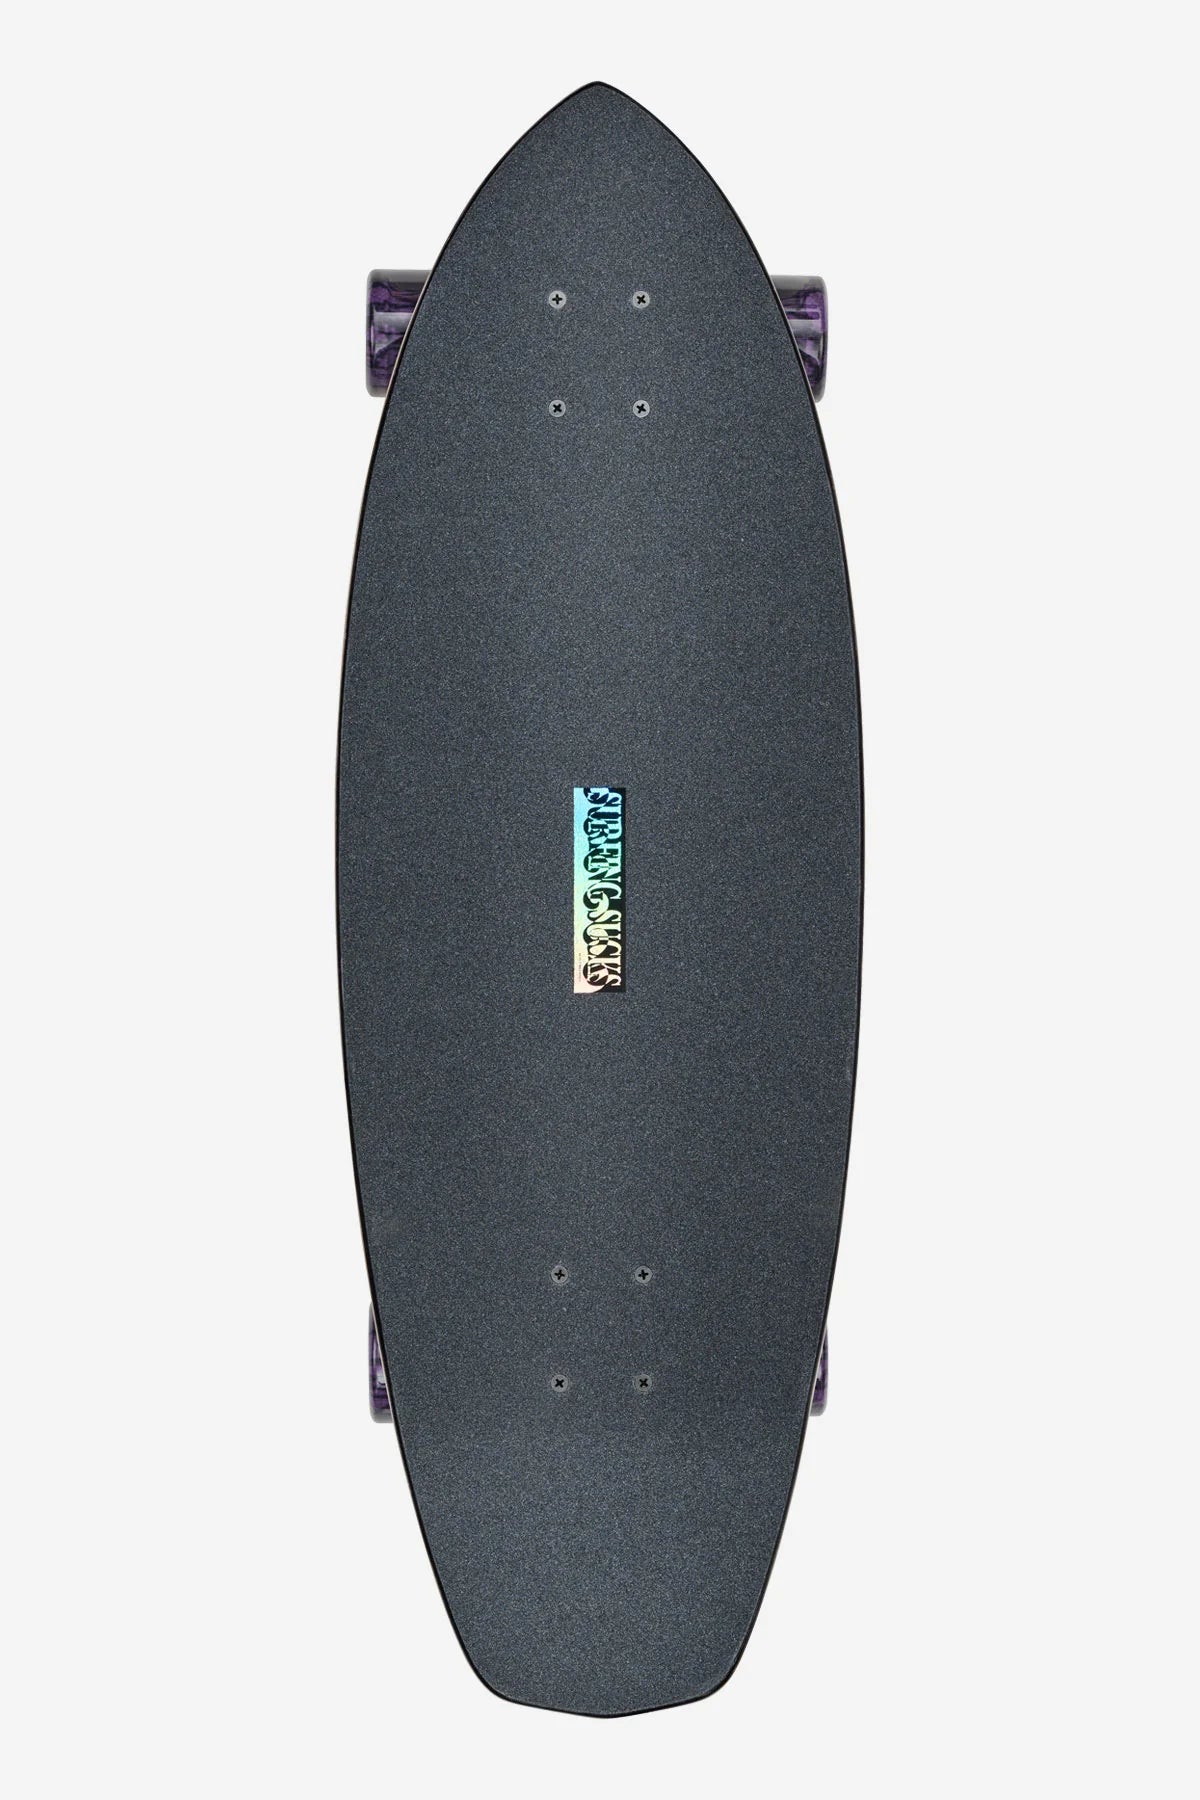 Dope Machine 32" Surf Skate - Misfit/Rain Oil